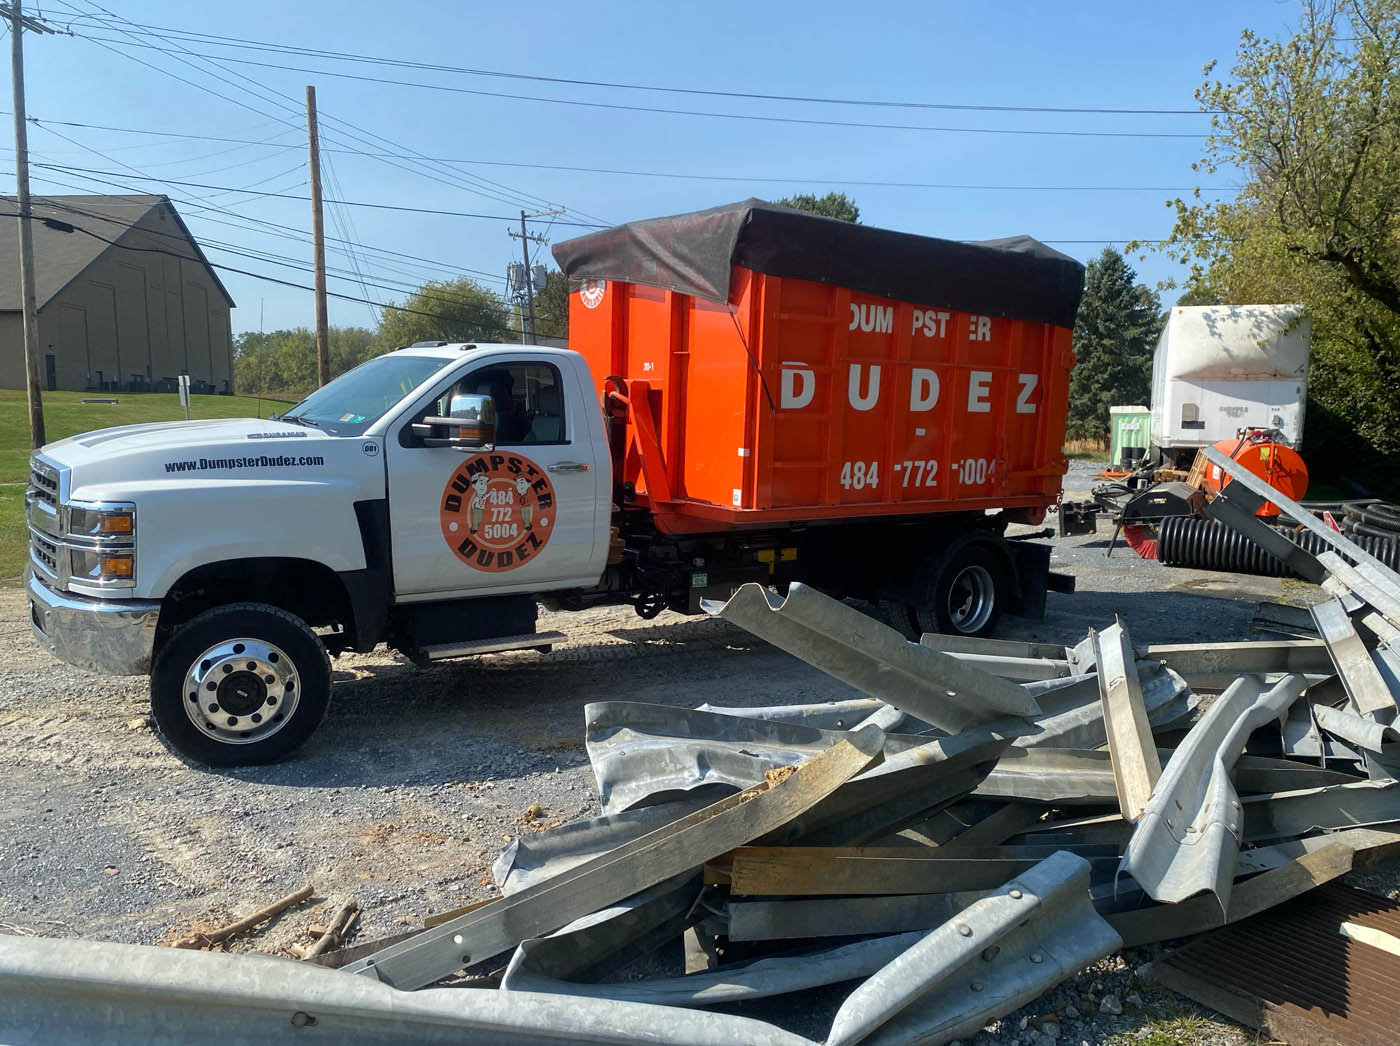 In search of junk haulers in Fayetteville–Springdale–Rogers, AR? Rent an orange dumpster from Dumpster Dudez!